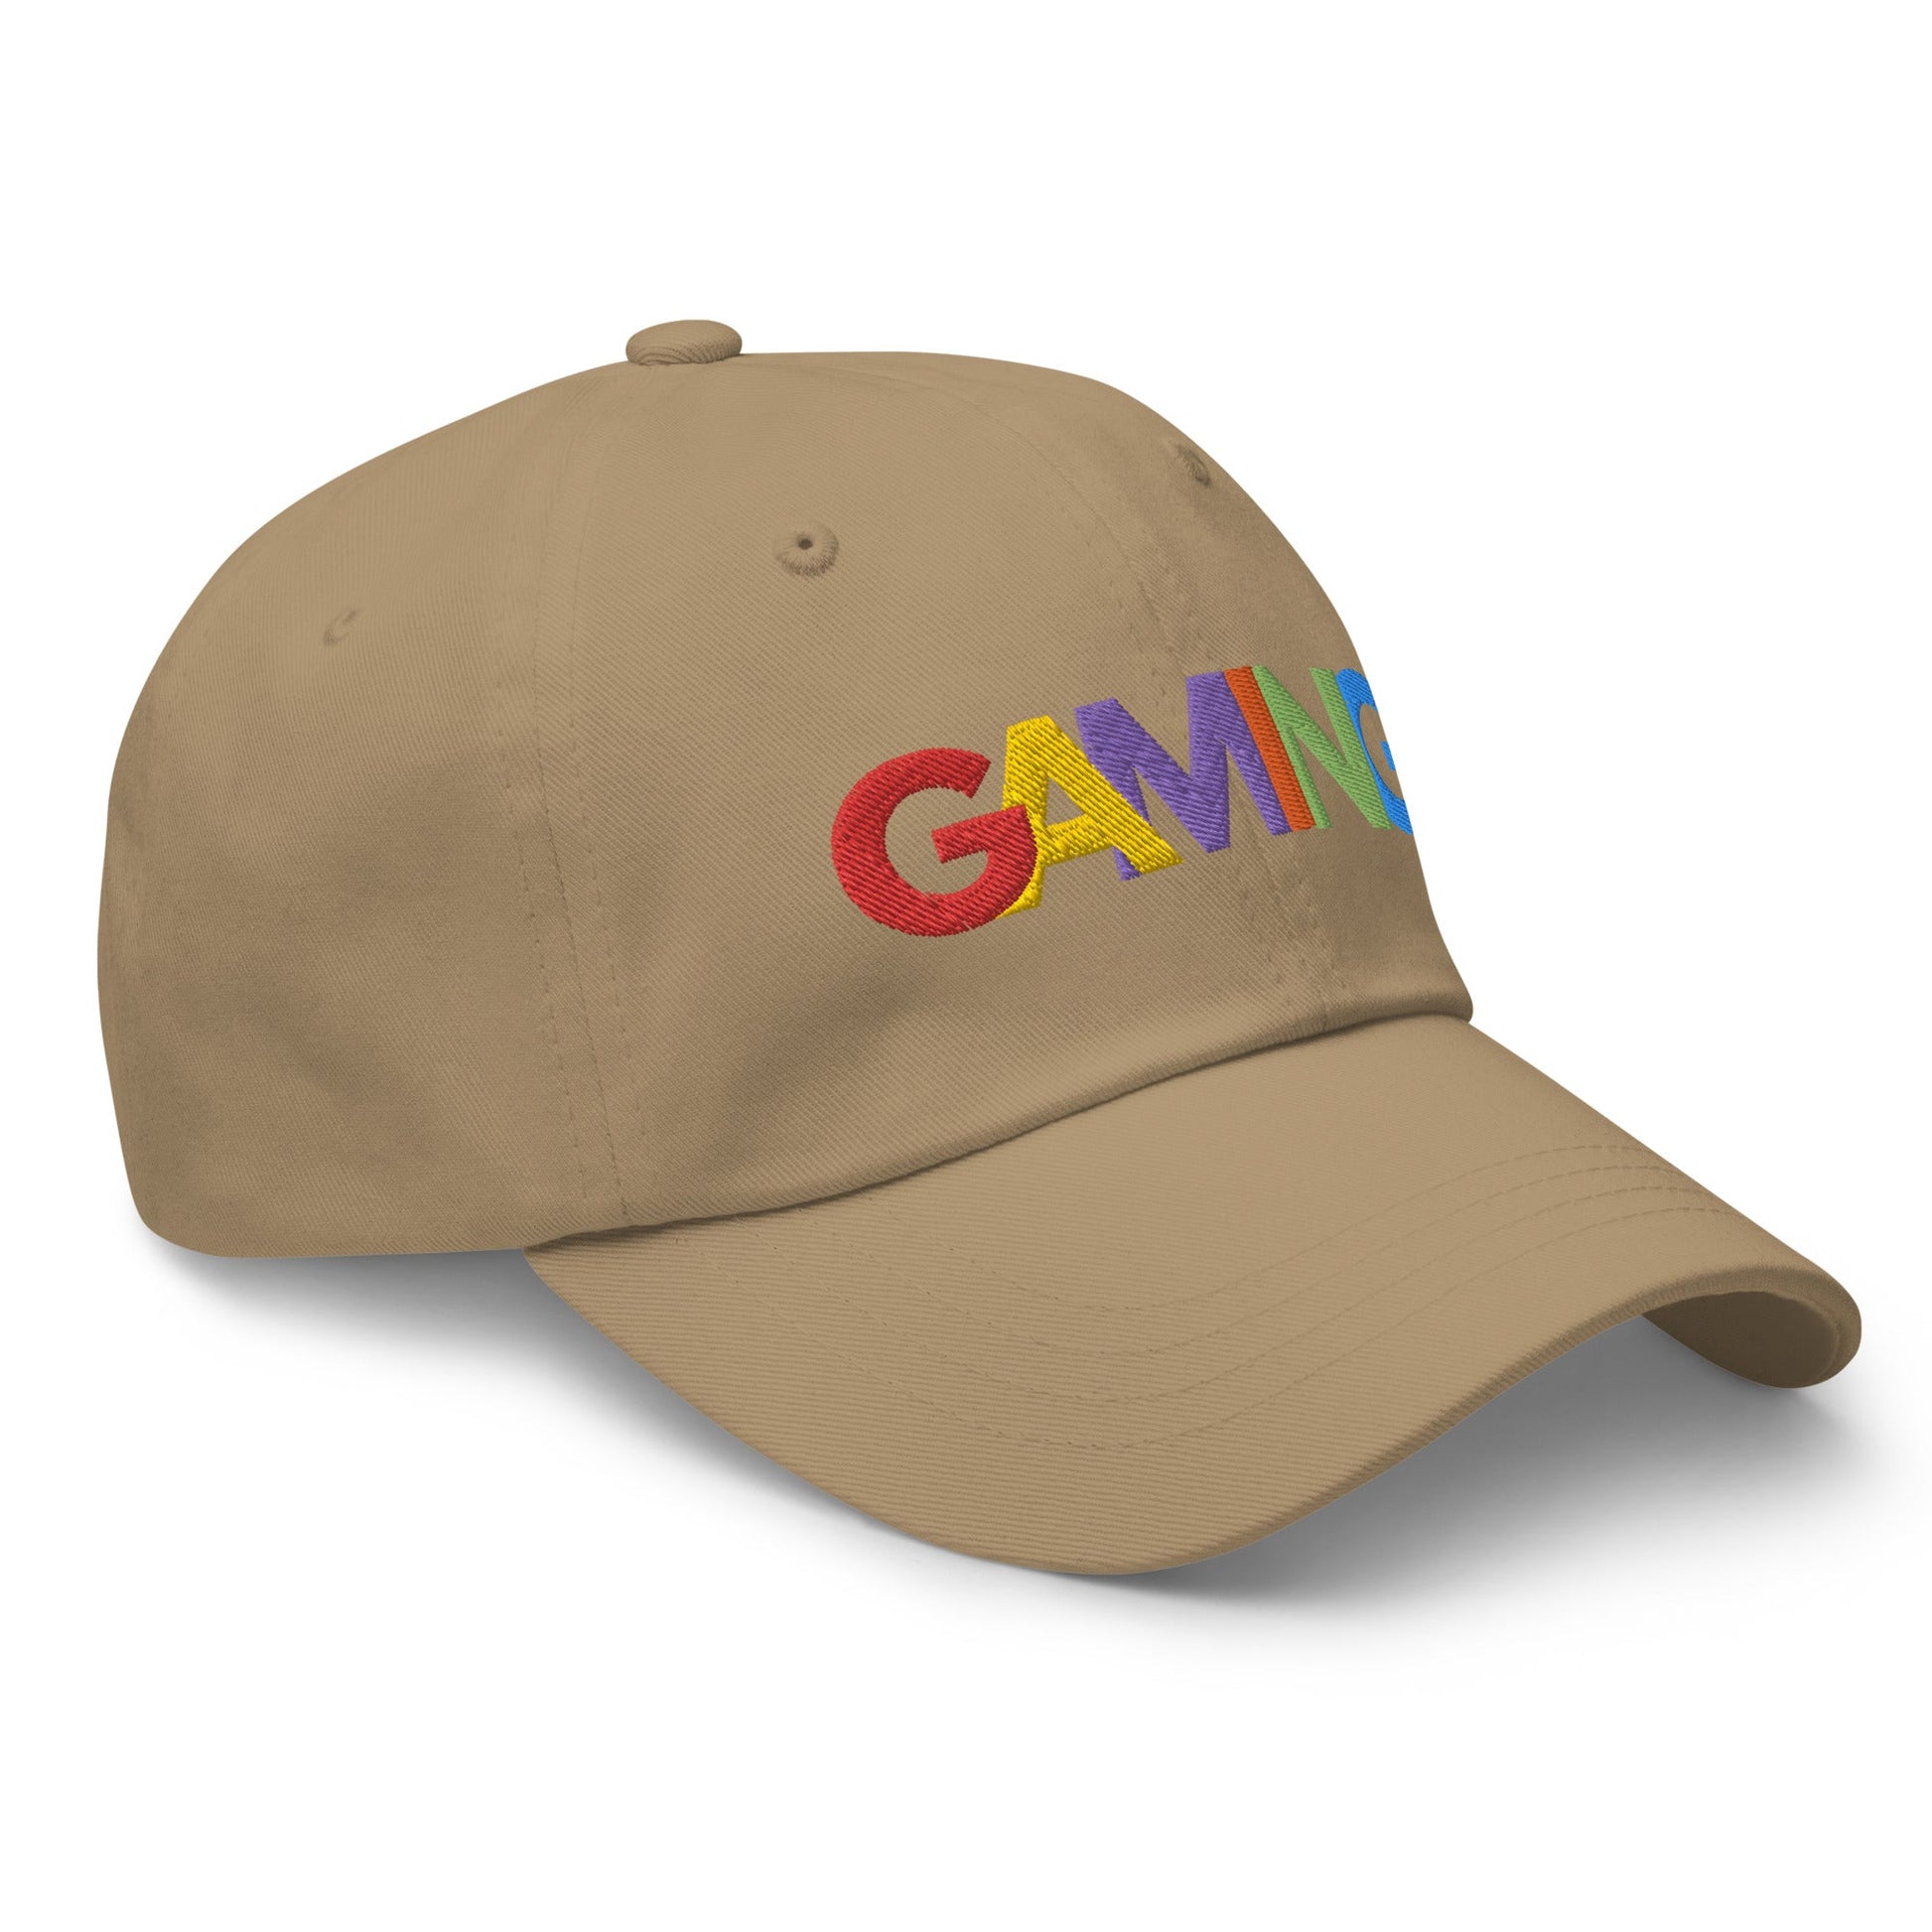 Colorful GAMING | Dad hat